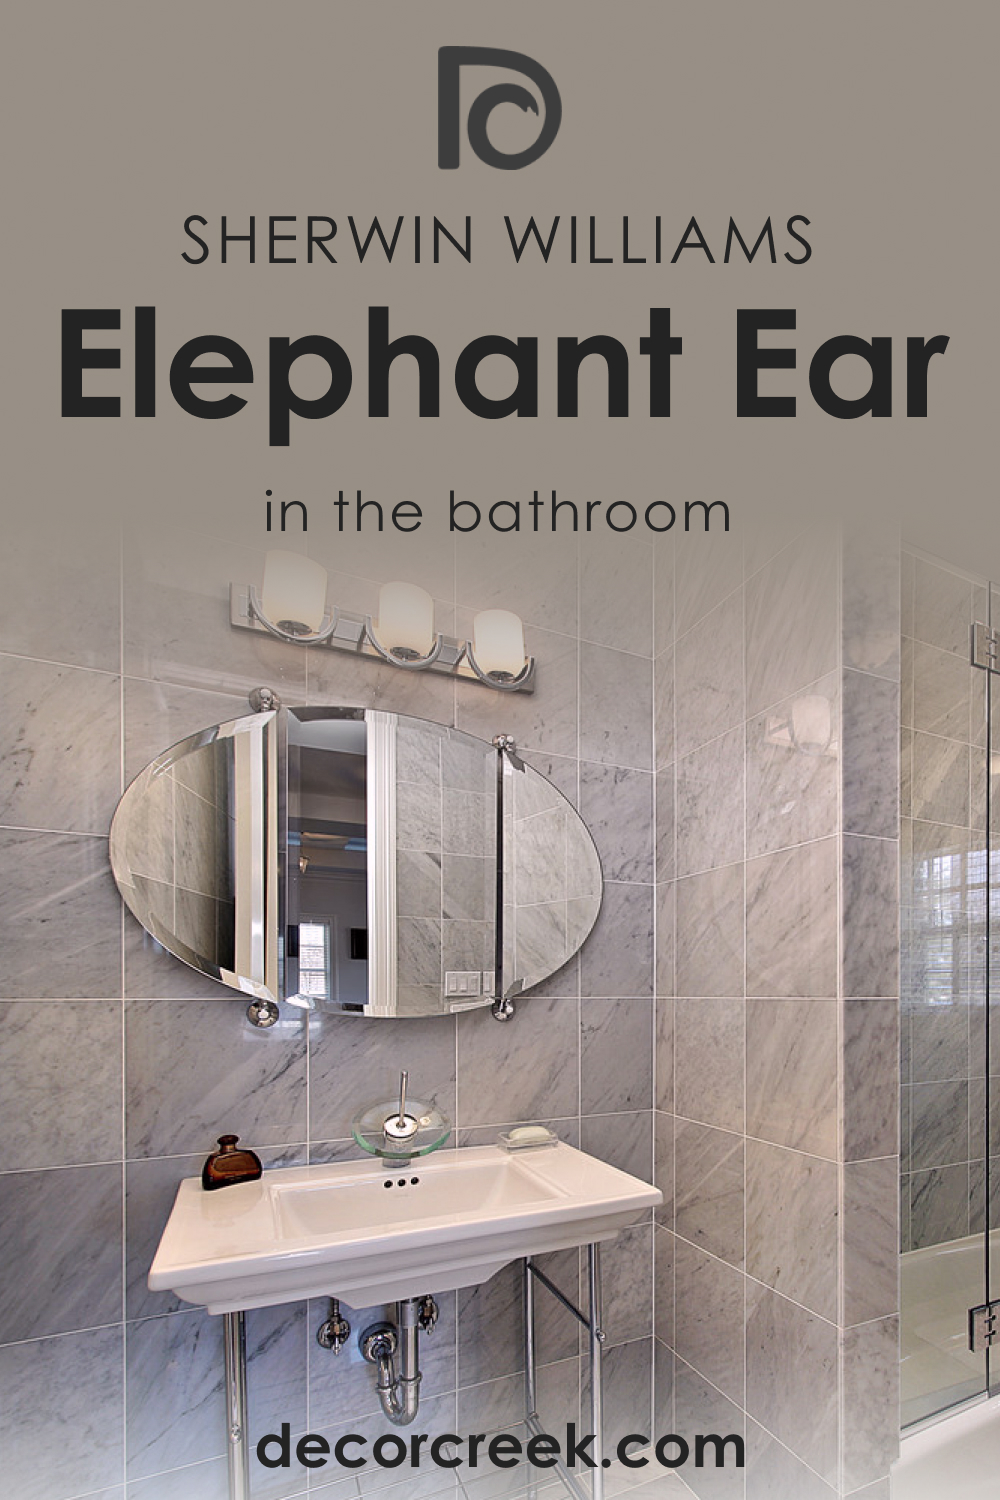 How to Use SW 9168 Elephant Ear in the Bathroom?